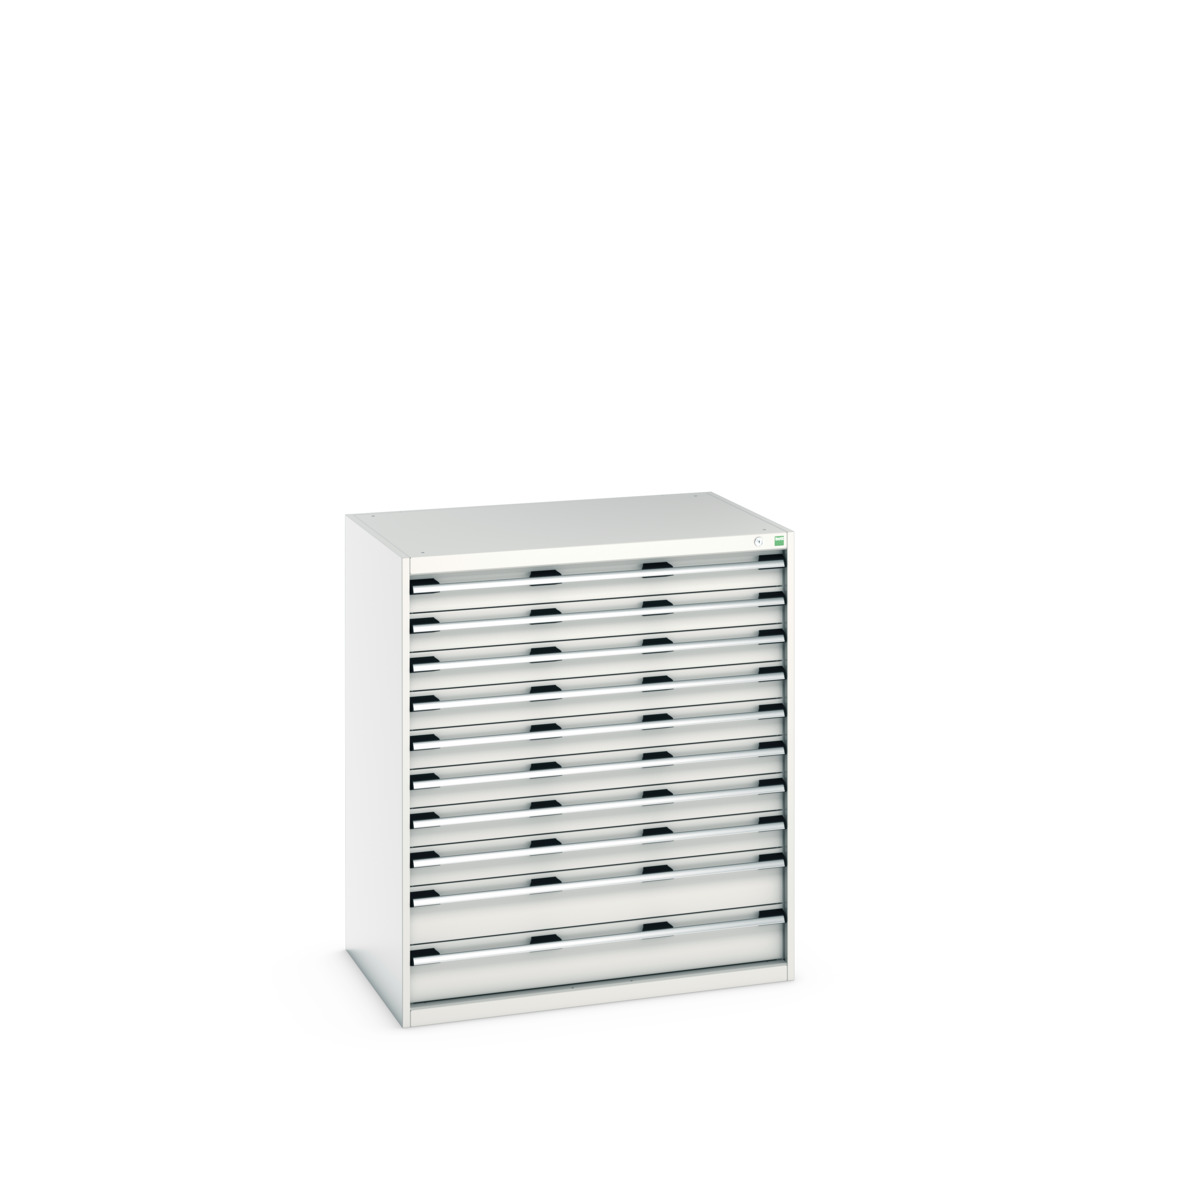 40029033.16V - cubio armoire à tiroirs SL-10712-10.1